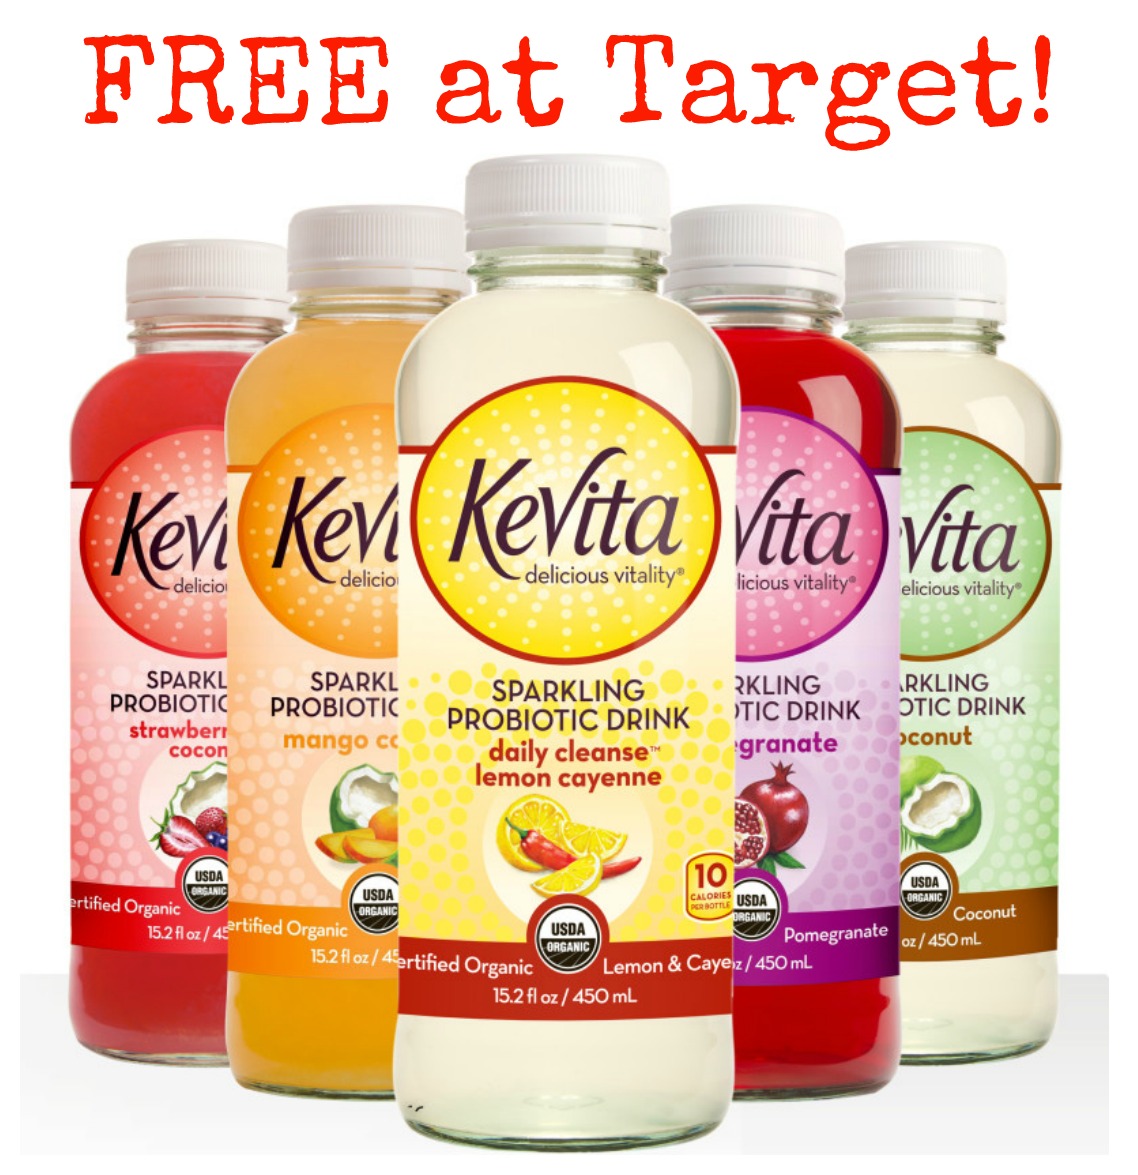 kevita probiotic drink target a2s